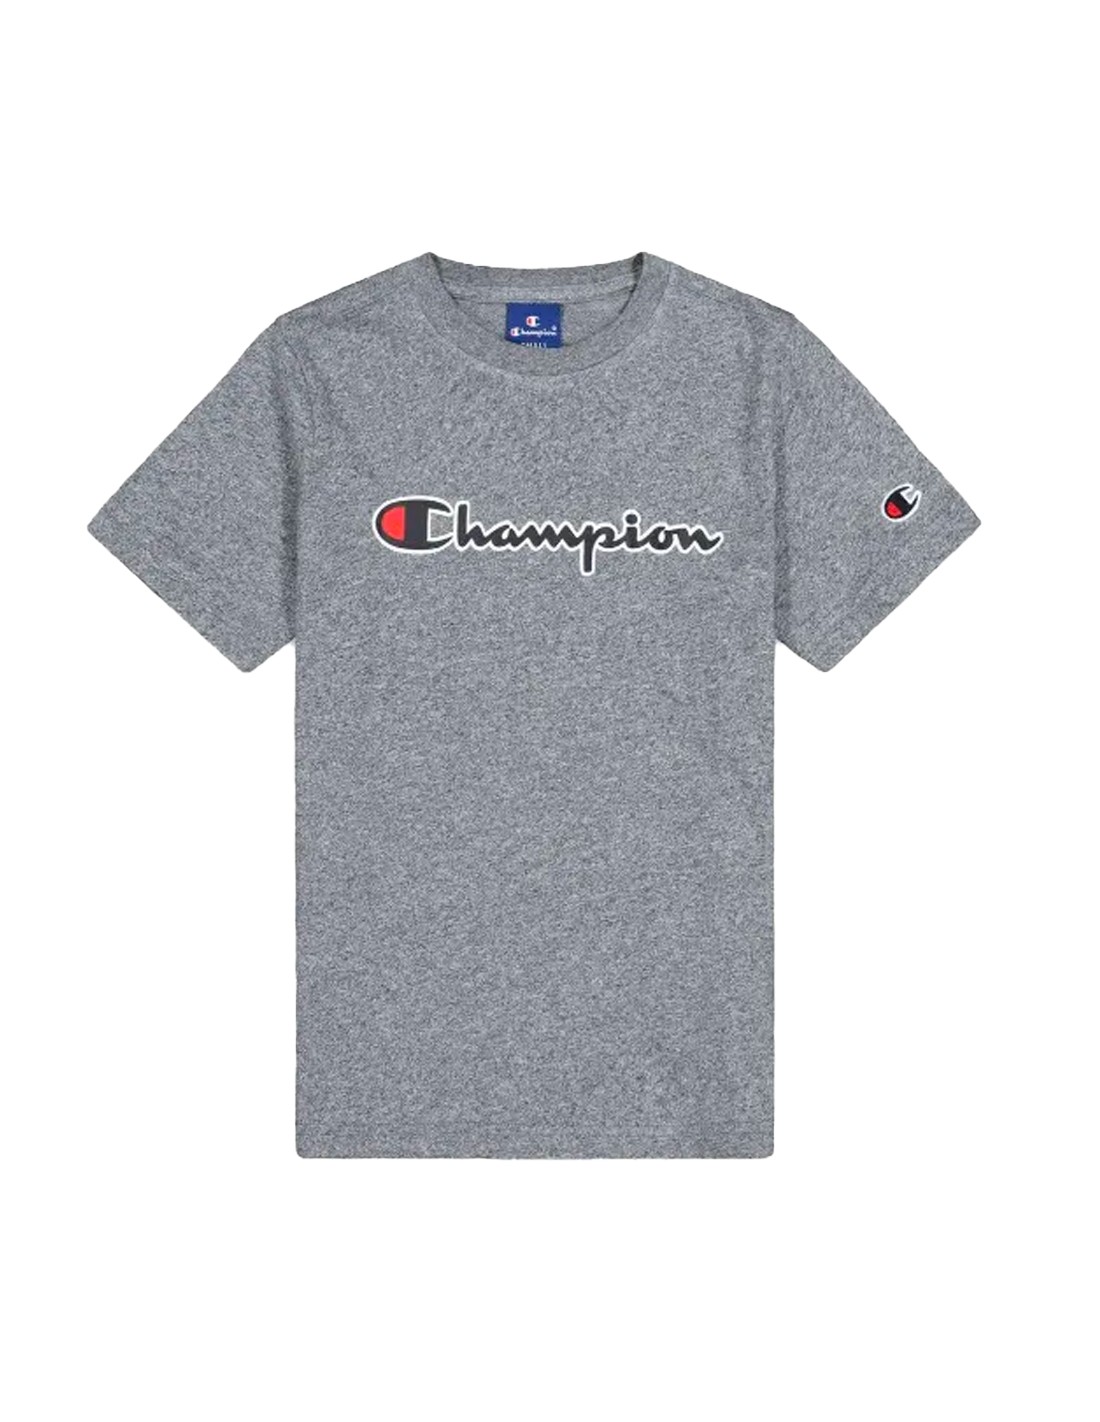 CHAMPION Rochester Logo - Grau - Kinder T-Shirt